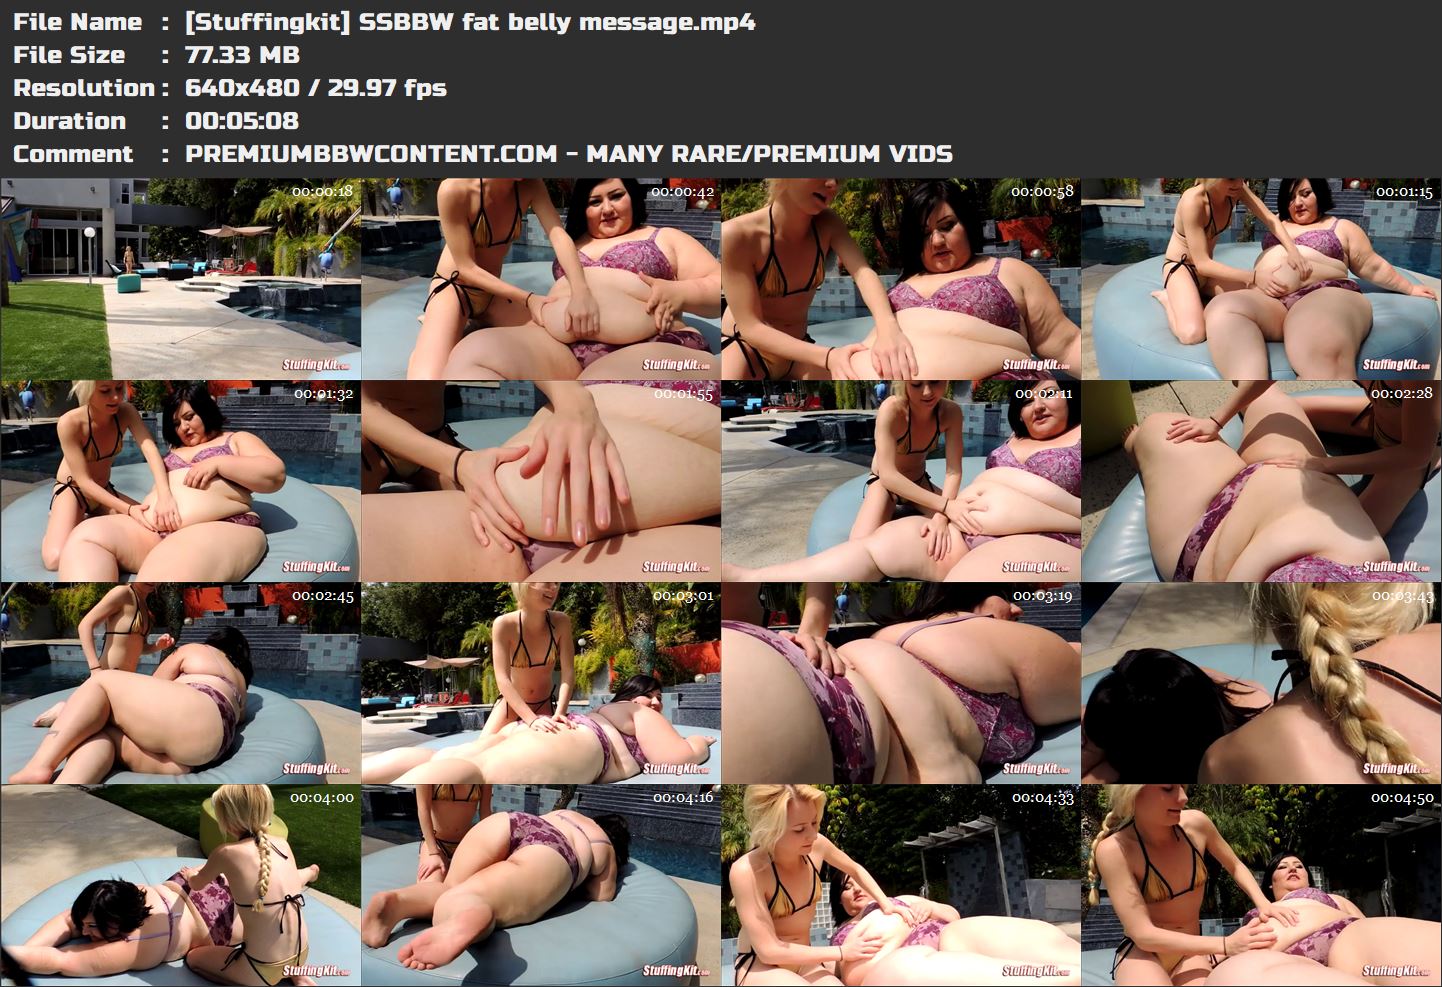 [Stuffingkit] SSBBW fat belly message thumbnails